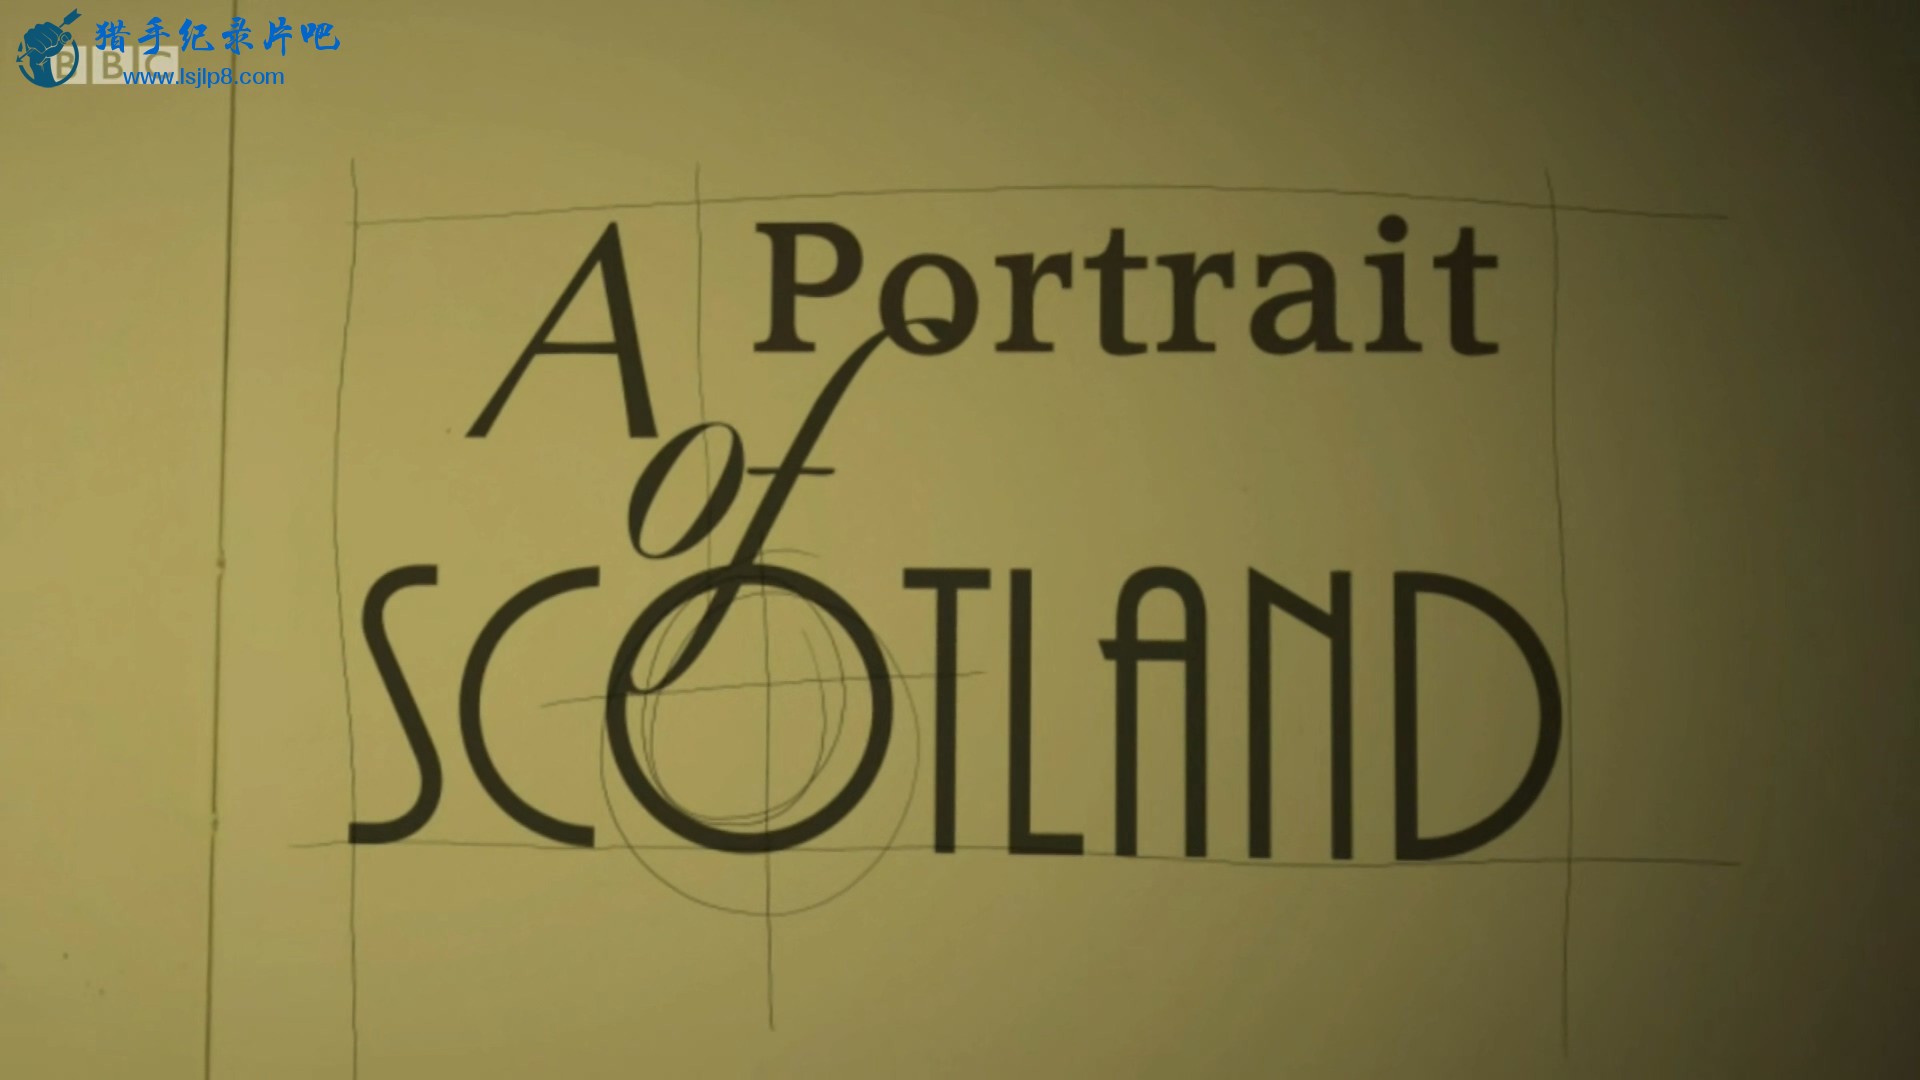 BBC.A.Portrait.of.Scotland.1080p.x265.AAC.MVGroup.org.mkv_20211104_154846.568.jpg